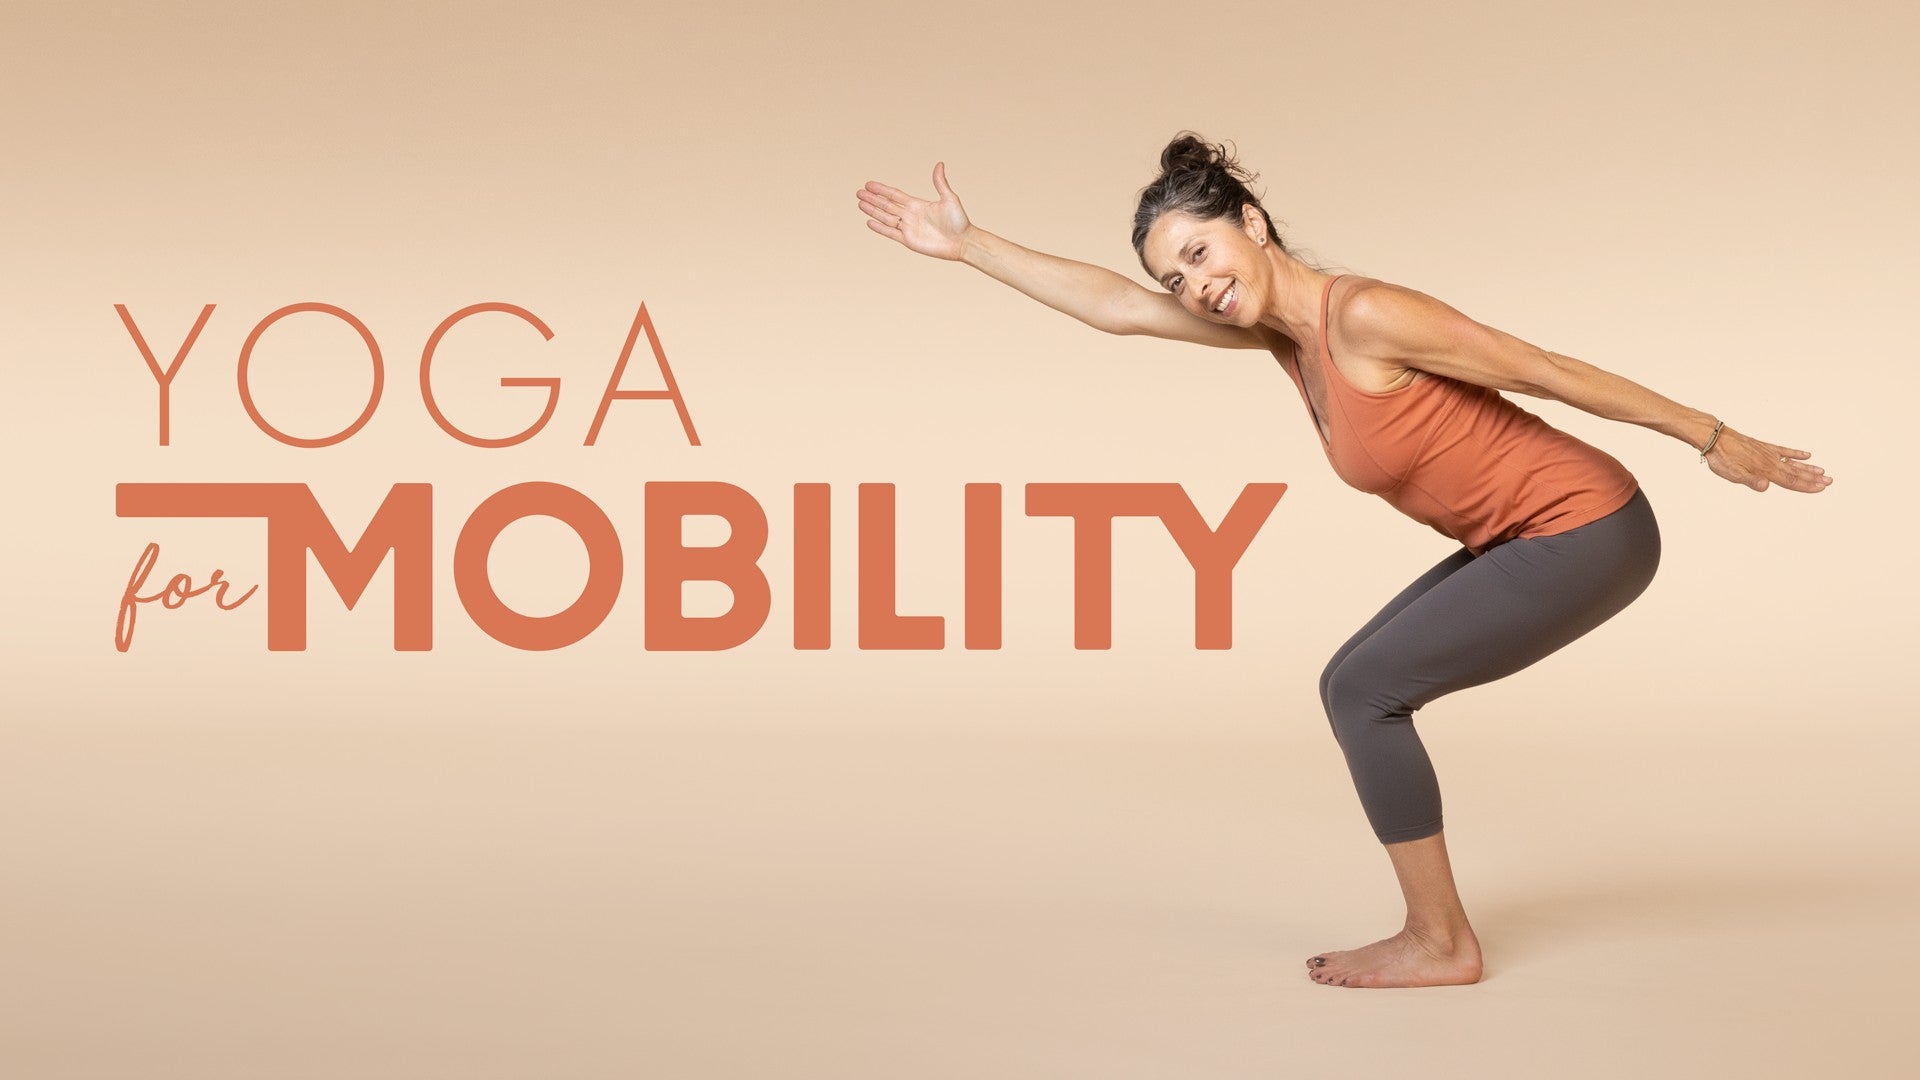 Yoga for Mobility Artwork